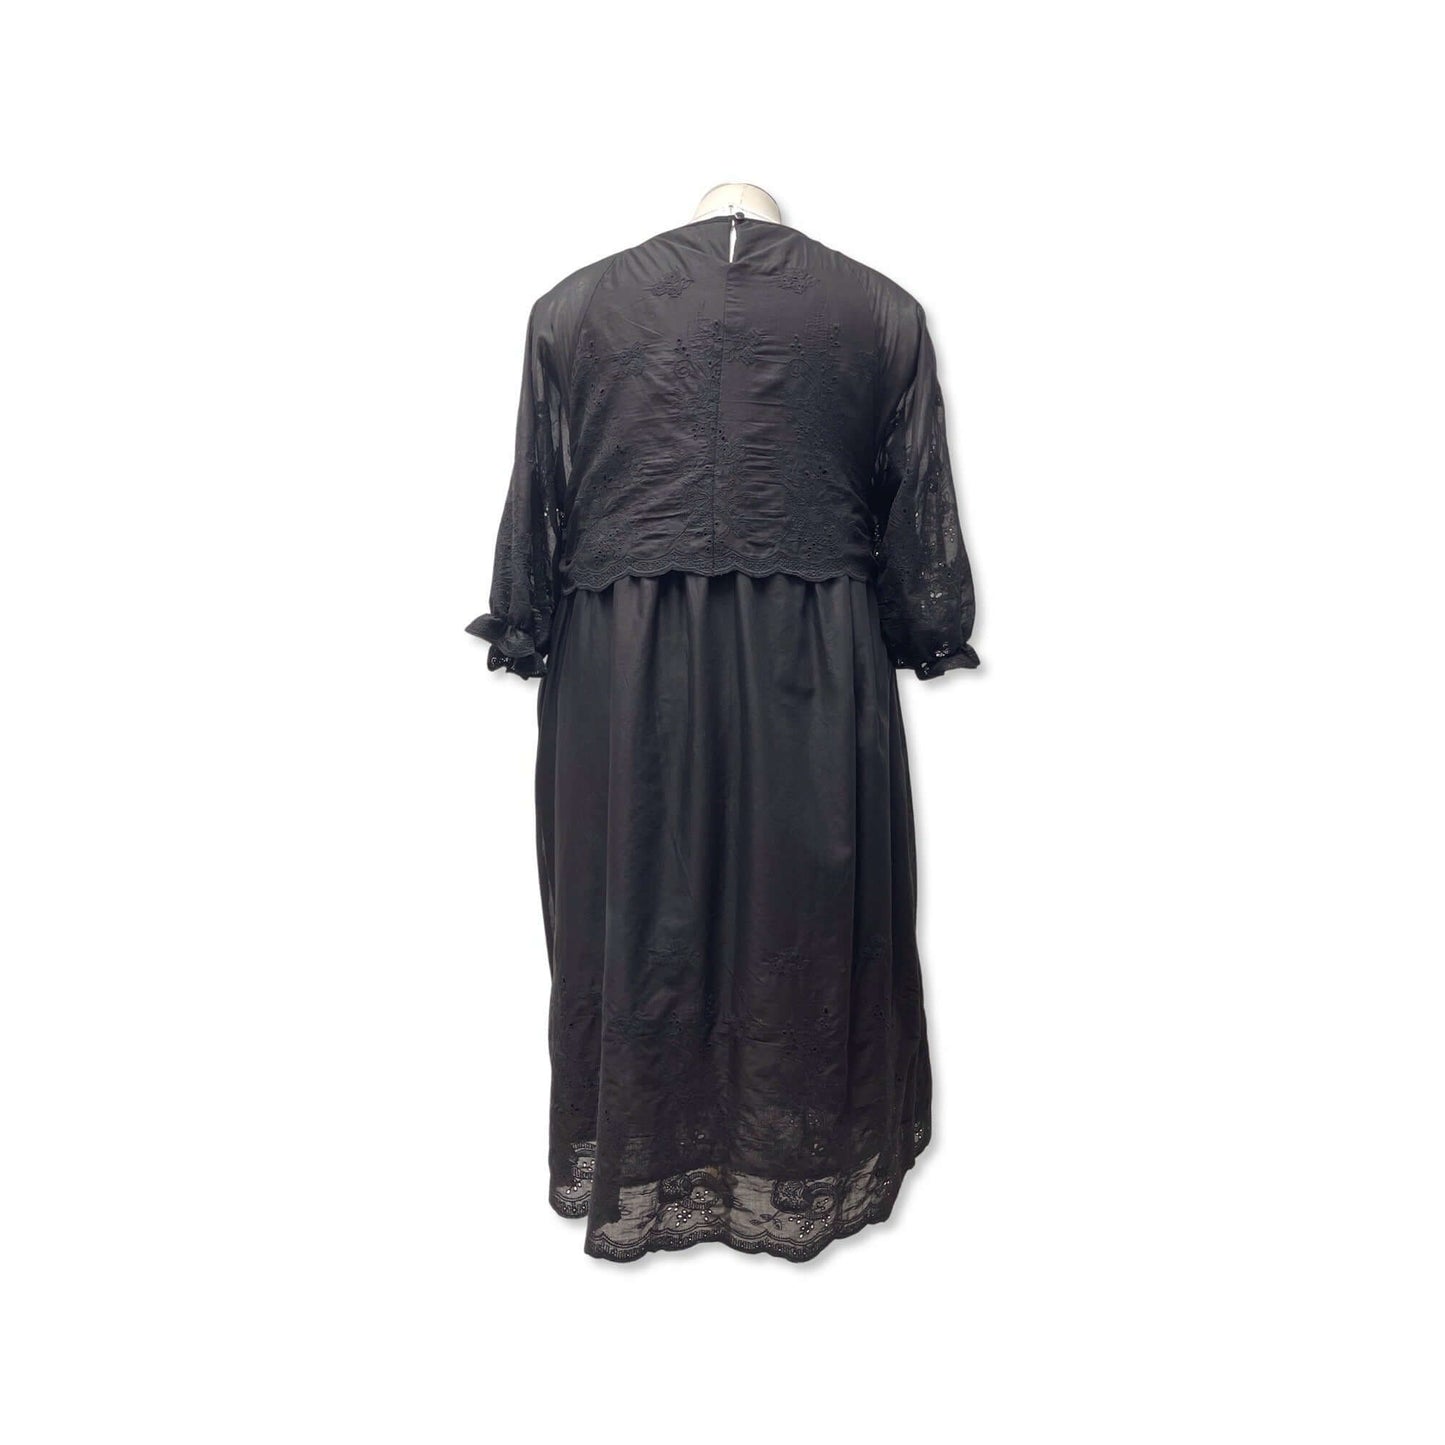 Bloom Clothing NZ,BRING ON SUMMER DRESS -Black,$289.00,